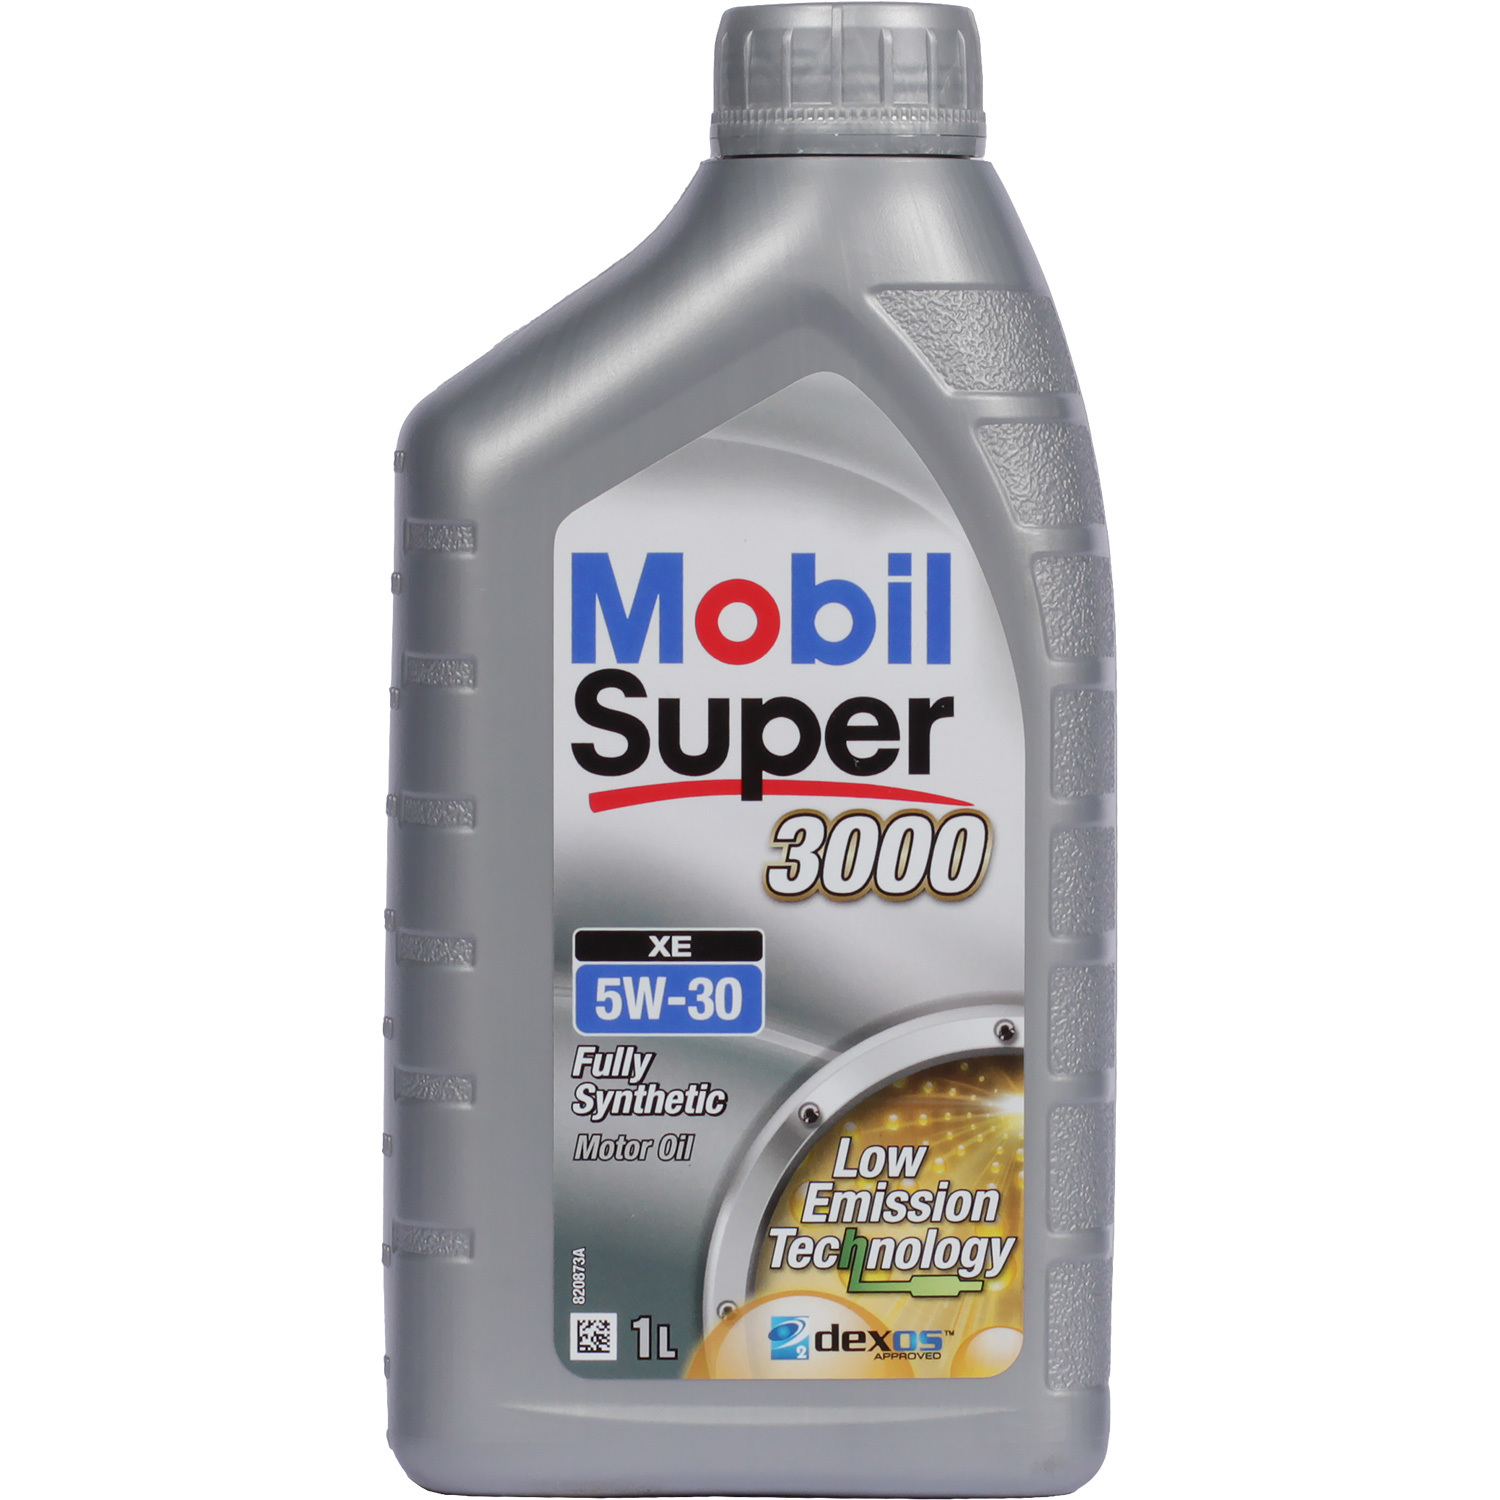 Mobil Моторное масло Mobil Super 3000 XE 5W-30, 1 л mobil моторное масло mobil super 3000 x1 5w 40 4 л